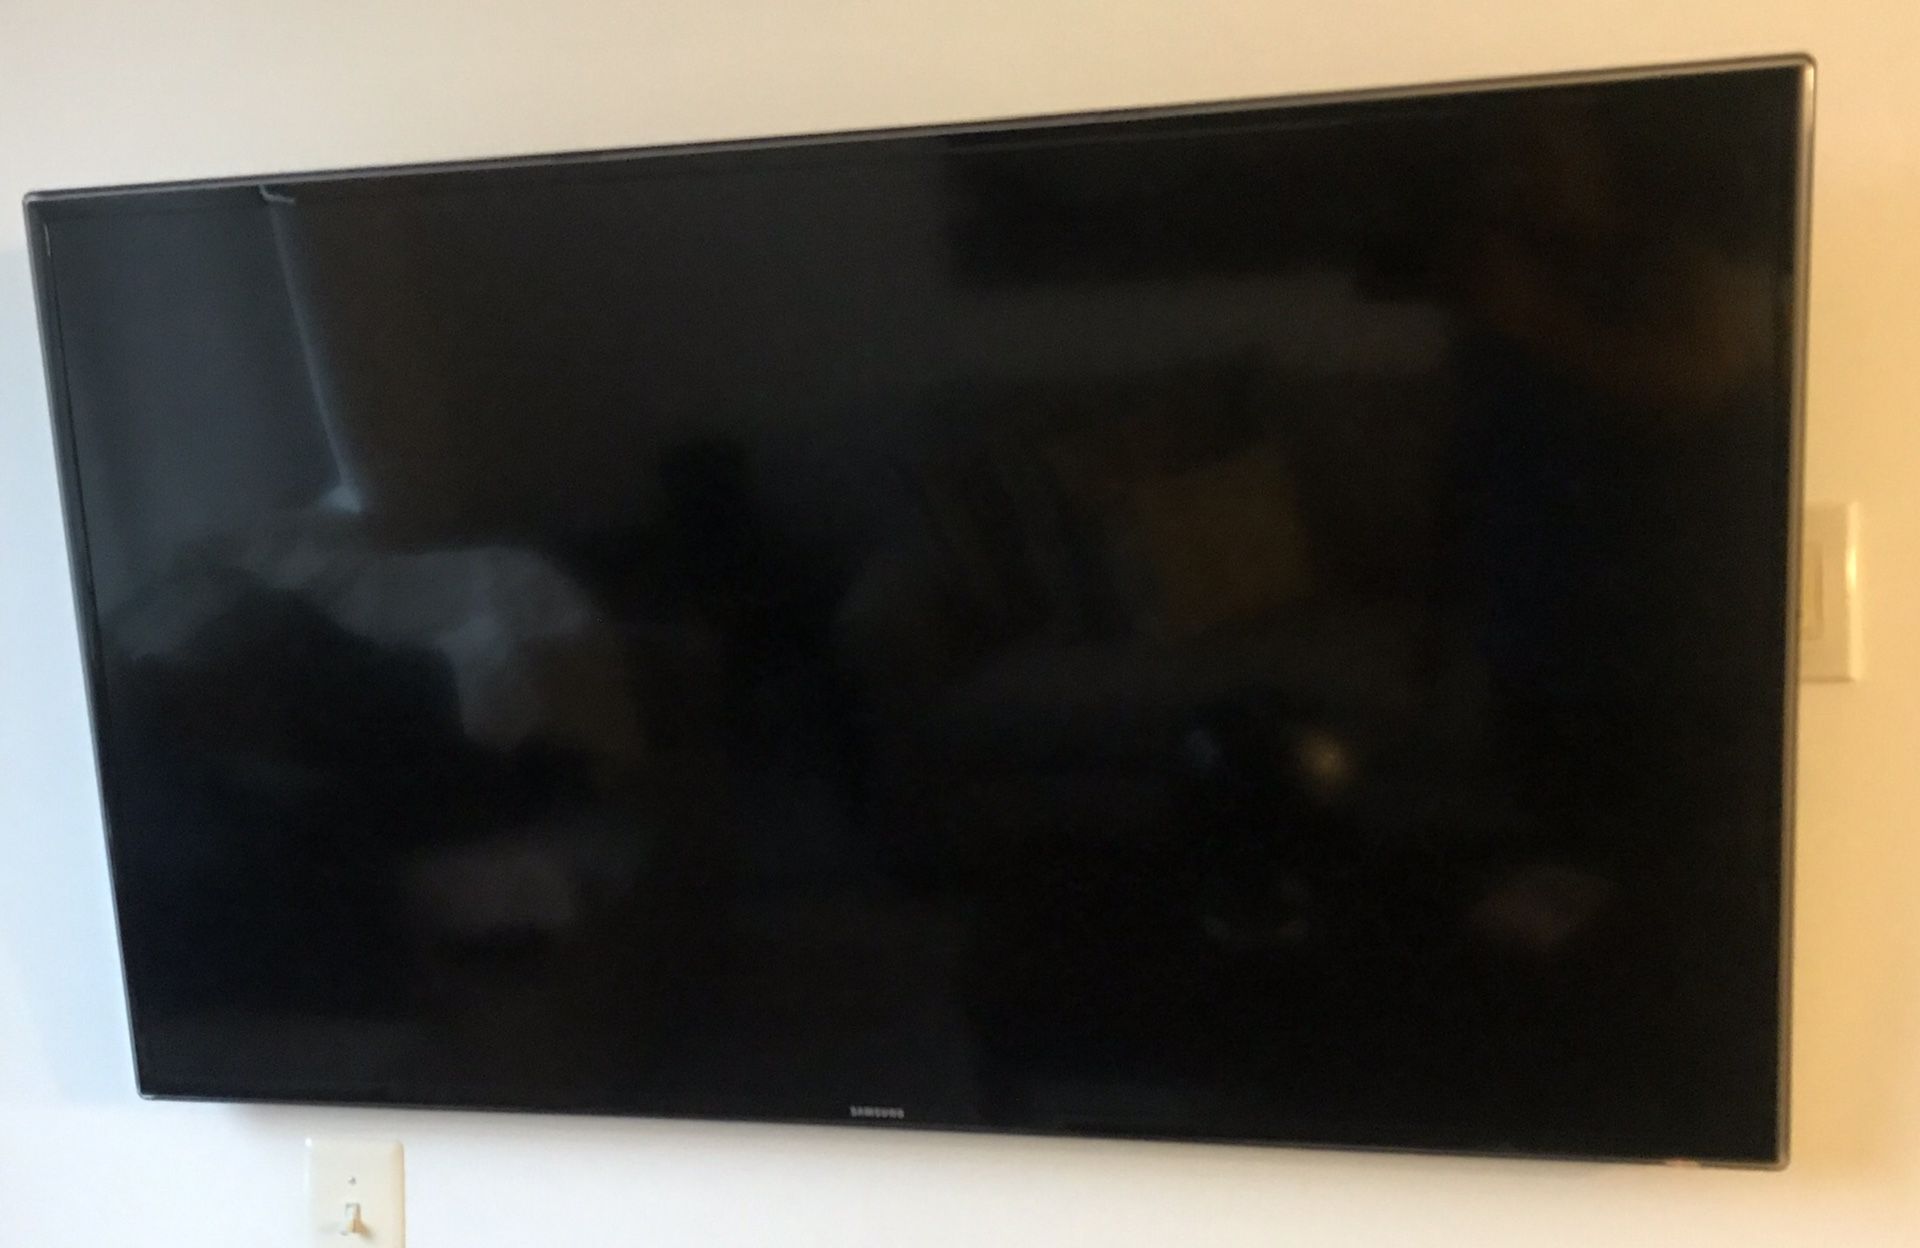 Samsung Smart TV 55 inch - $300